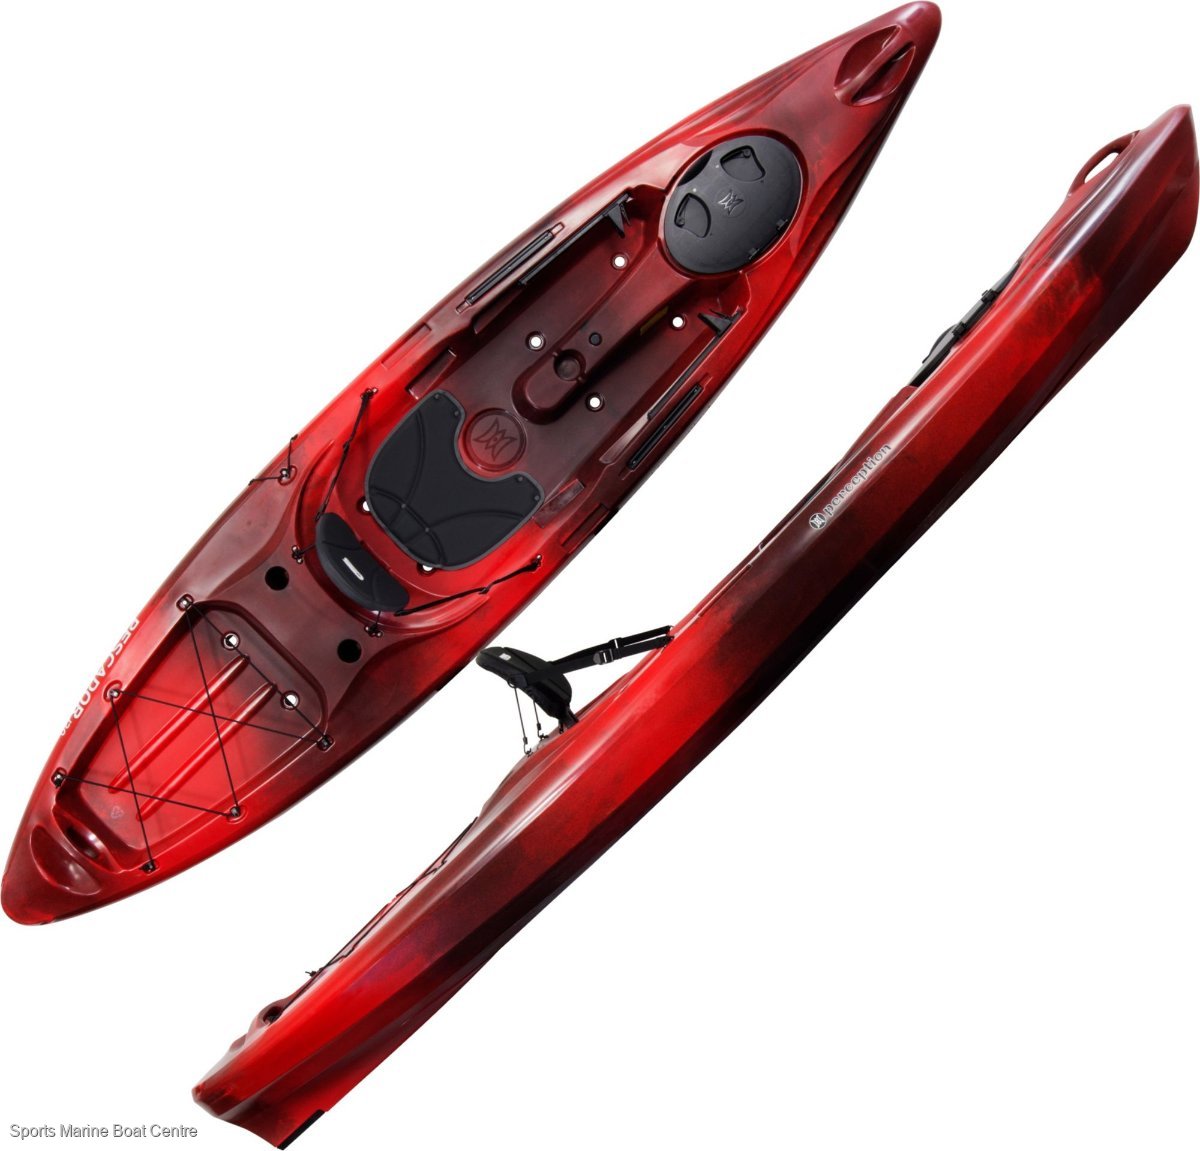 Perception Pescador 12 fishing kayak in red